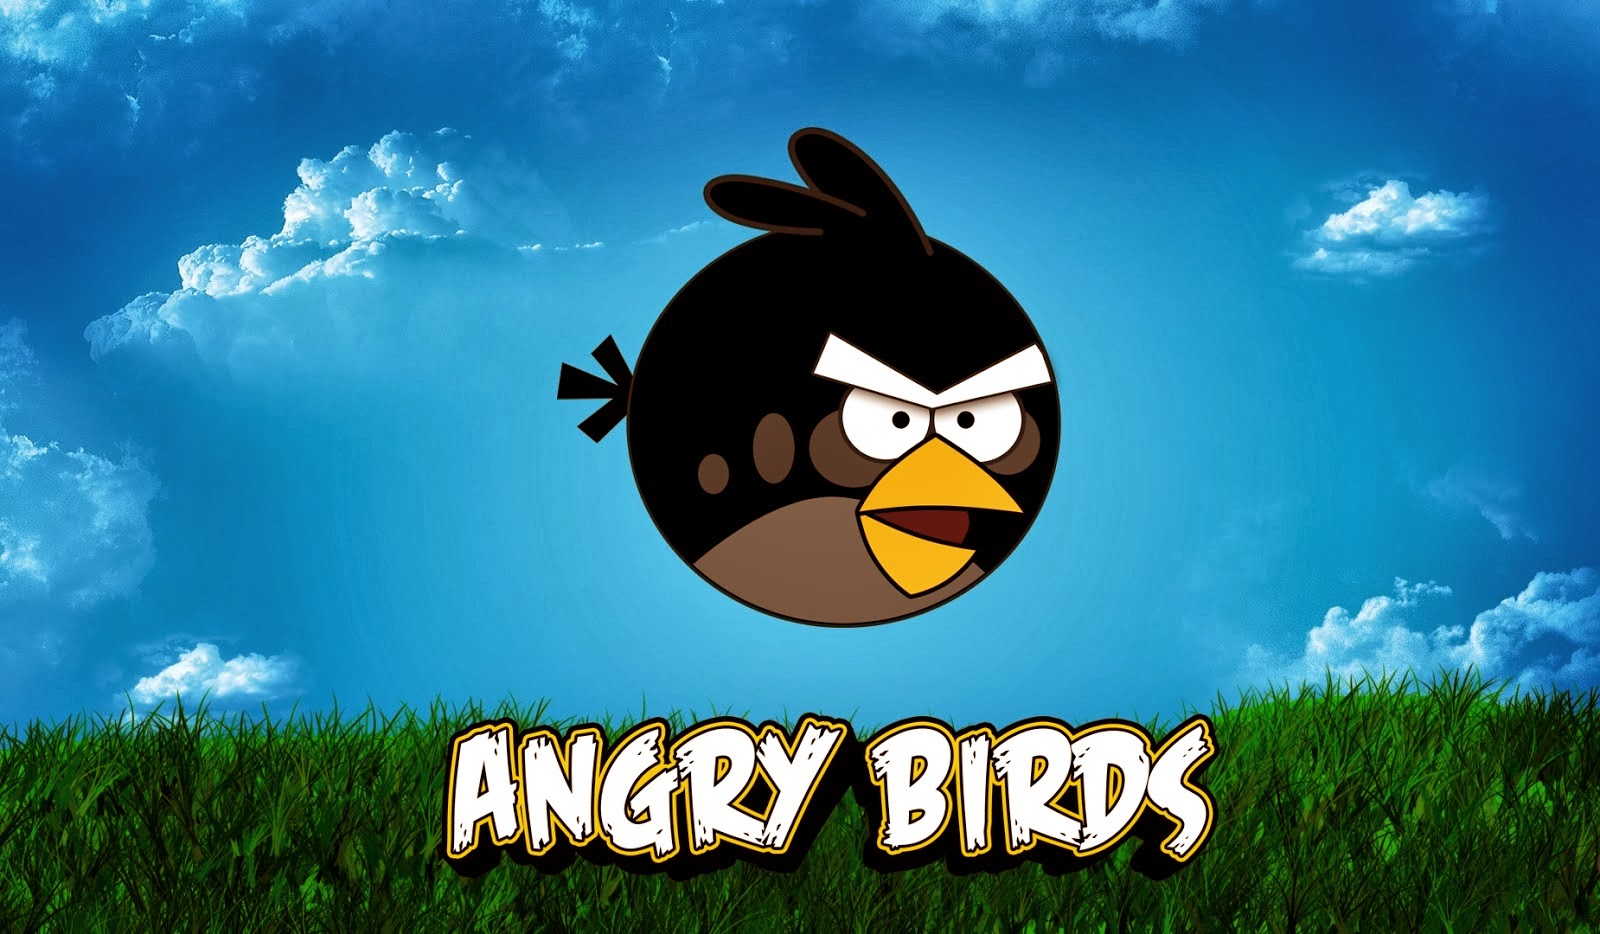 carta da parati lucu,cartone animato,angry birds,cartone animato,software per videogiochi,cielo